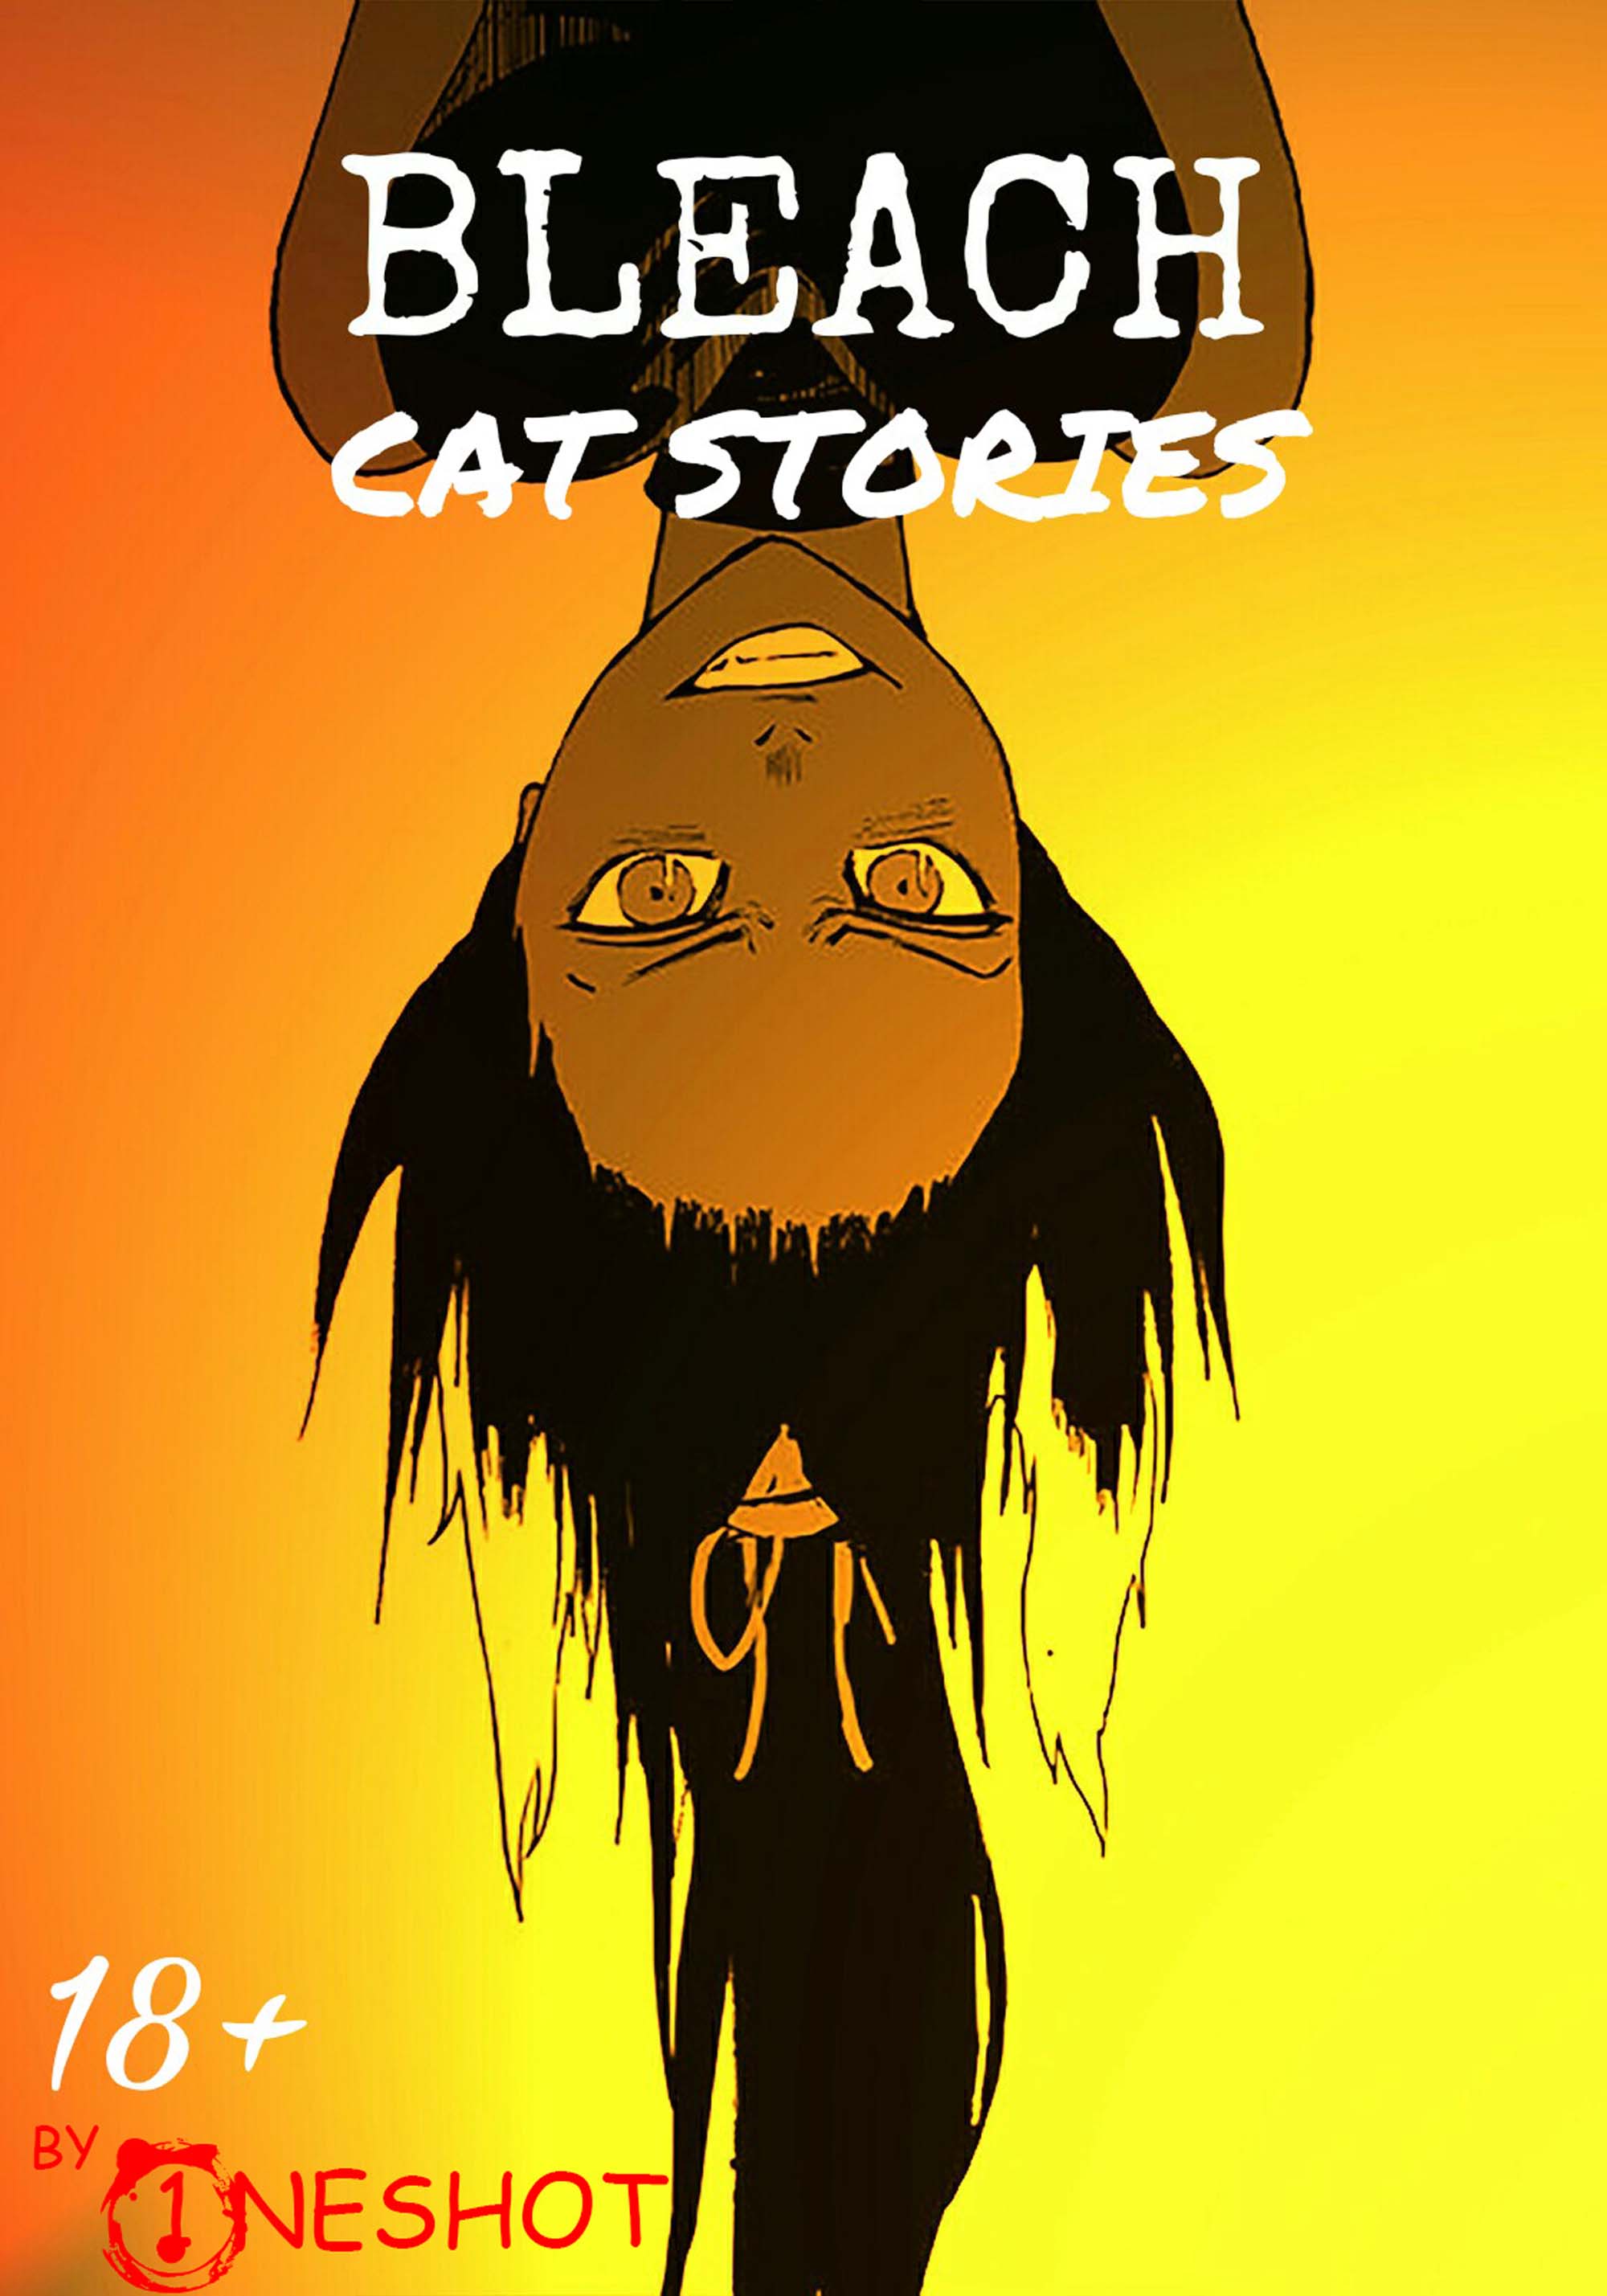 BLEACH - Cat stories from Oneshot